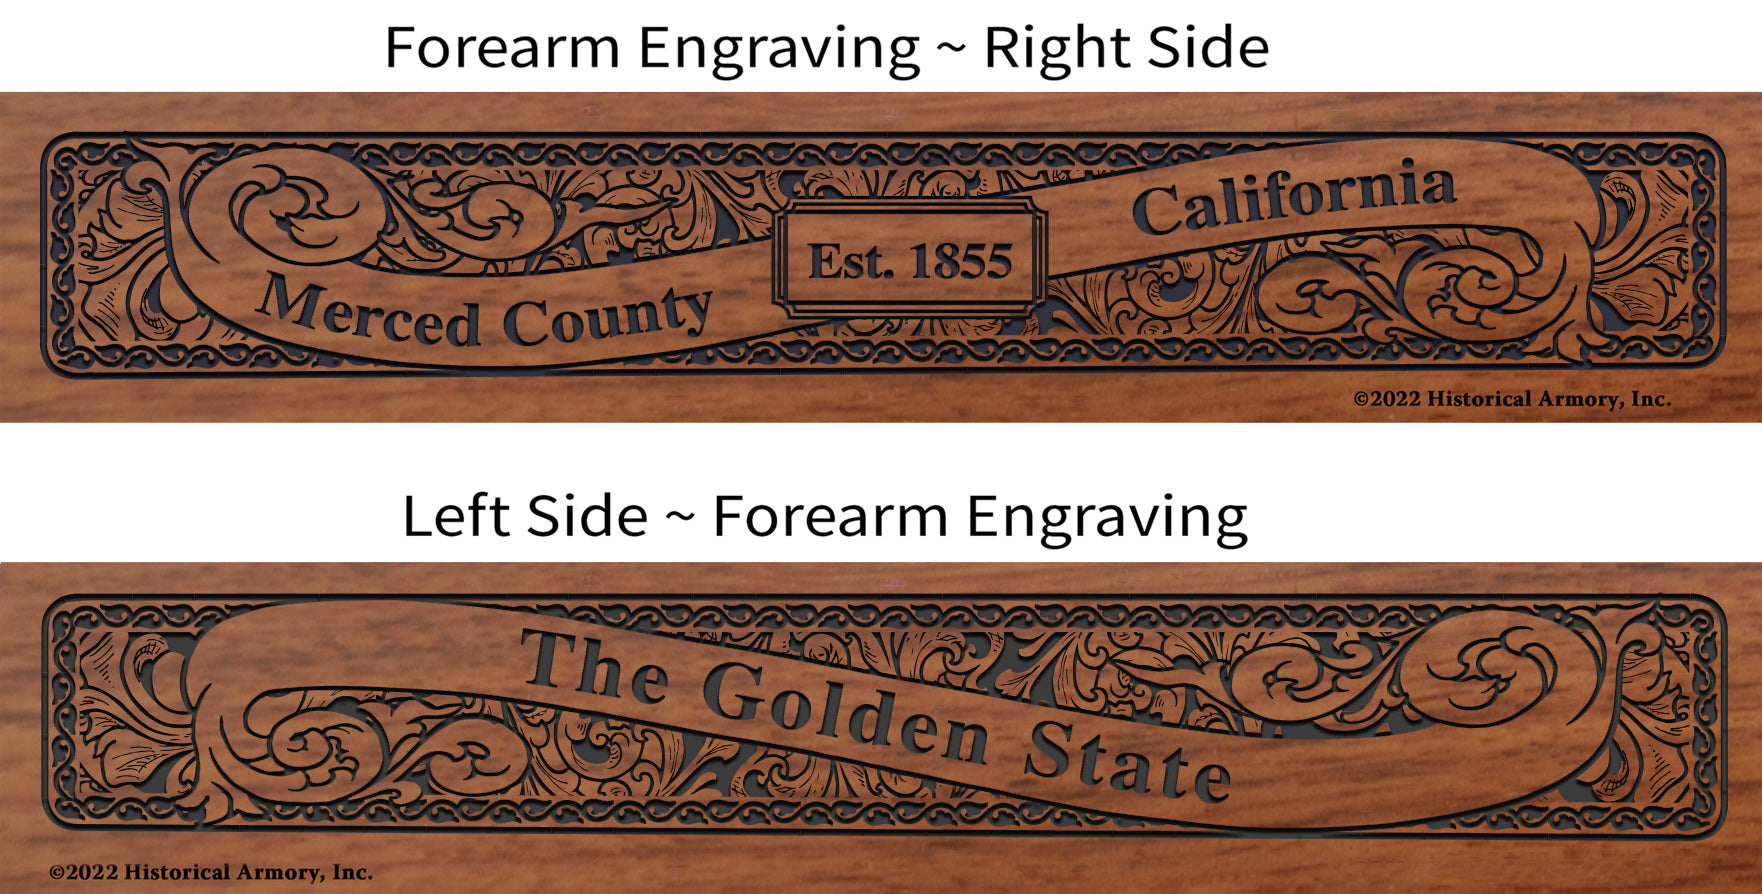 Merced County California Engraved Rifle Forearm